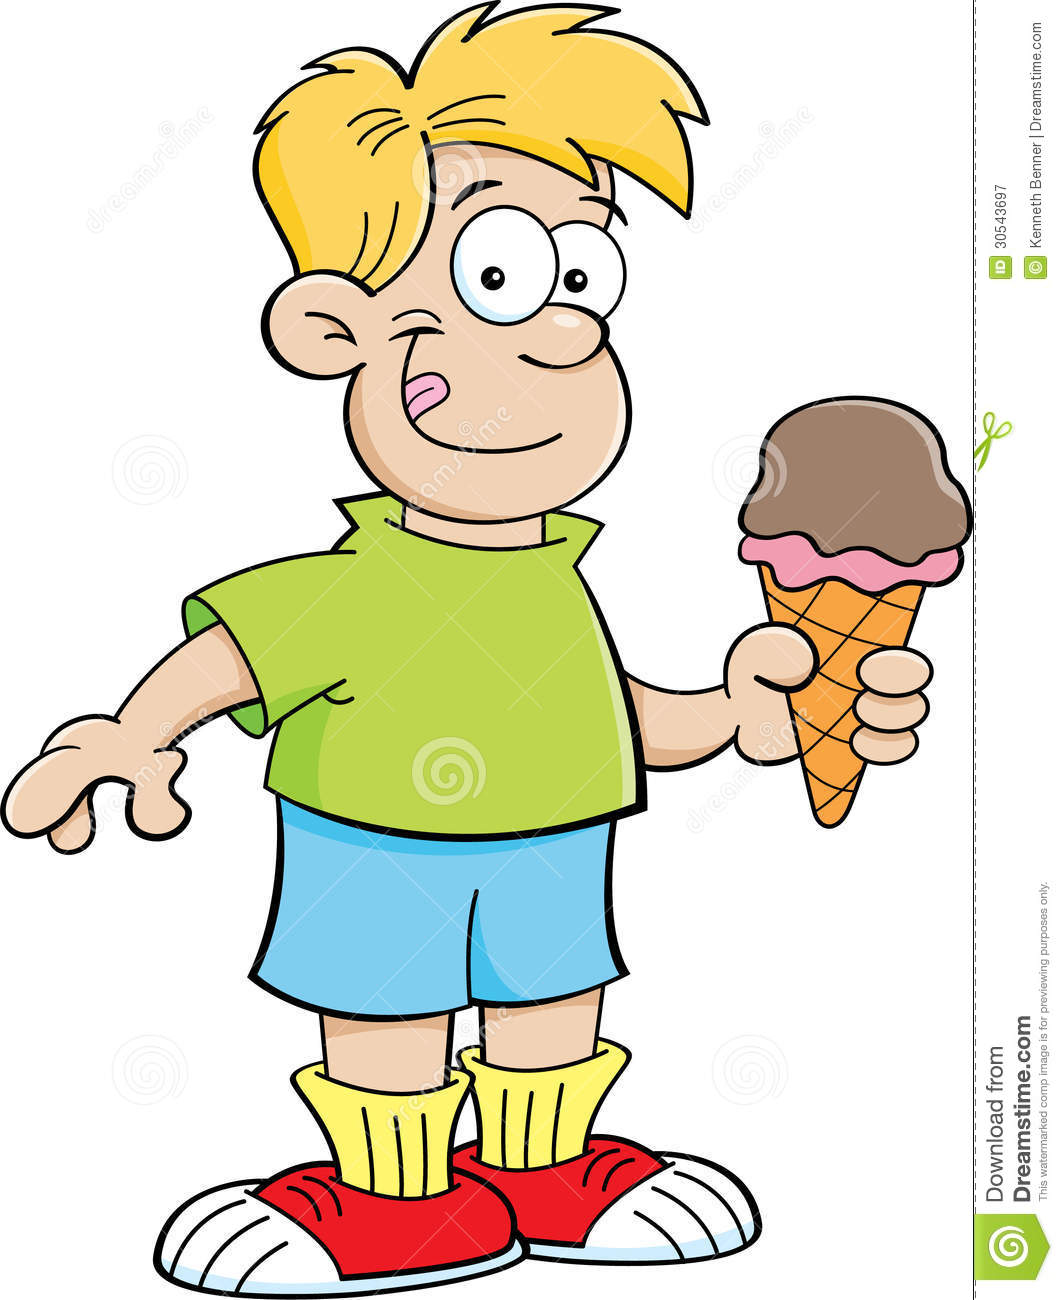 Cartoon Boy Eating An Ice Cream Cone Royalty Free Stock Photography